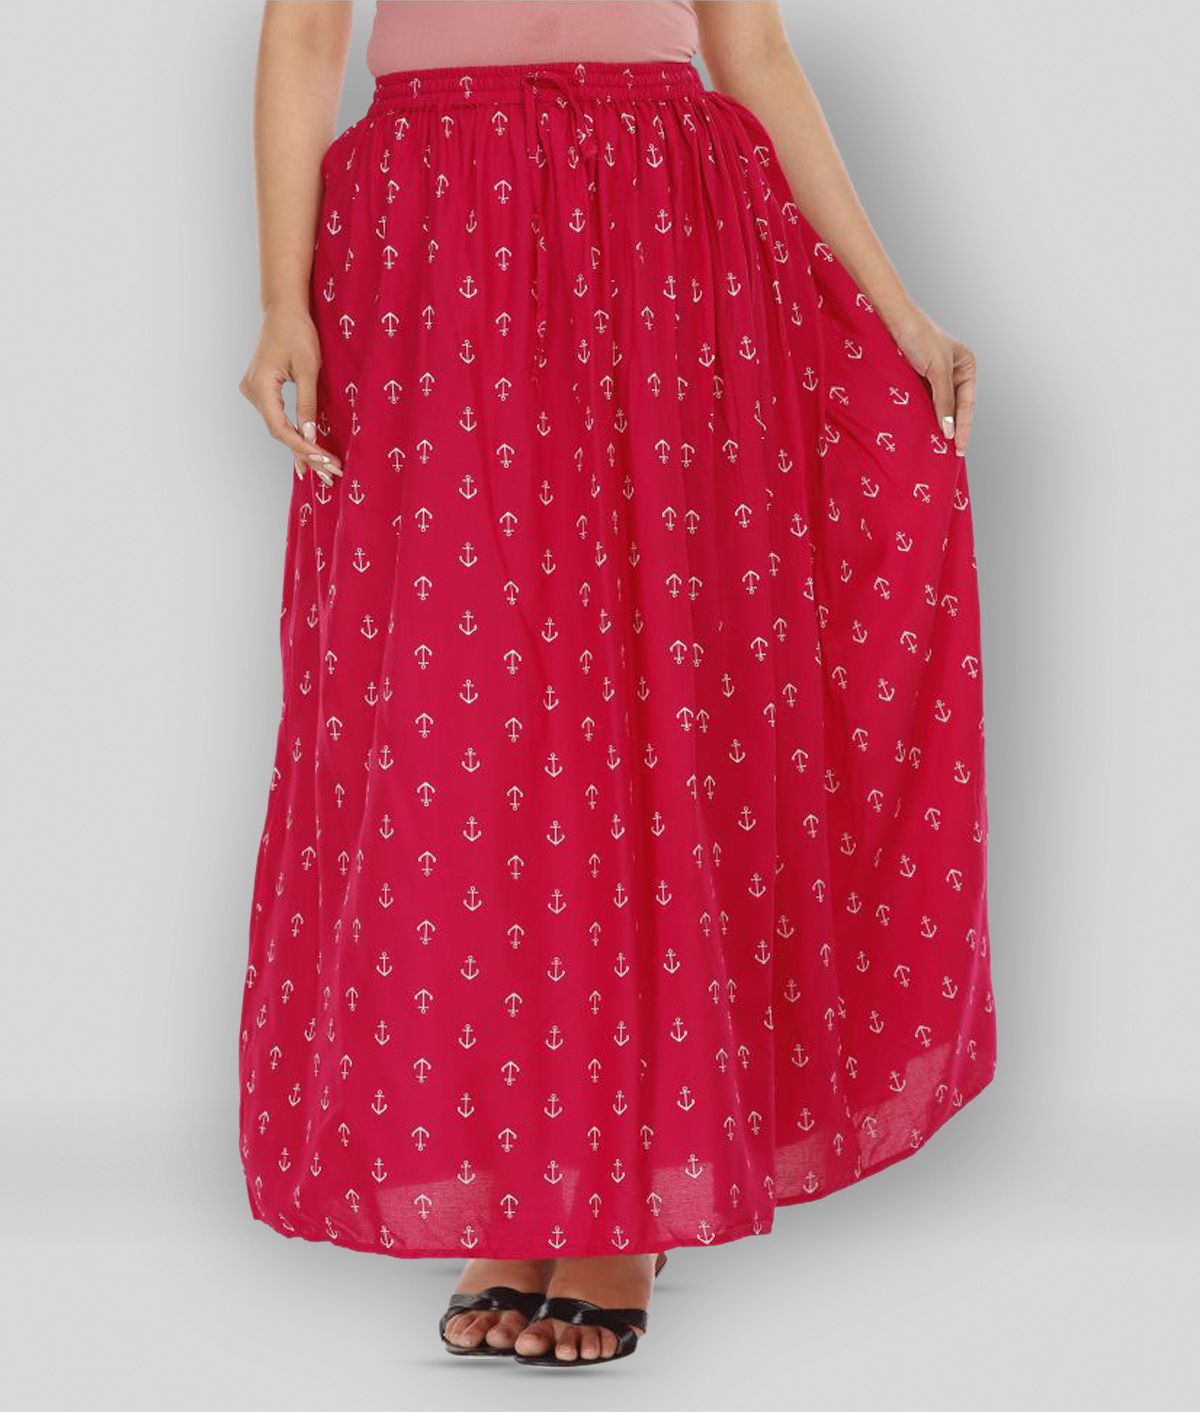     			BHARTI CREATION Rayon Wrap Skirt - Pink Single